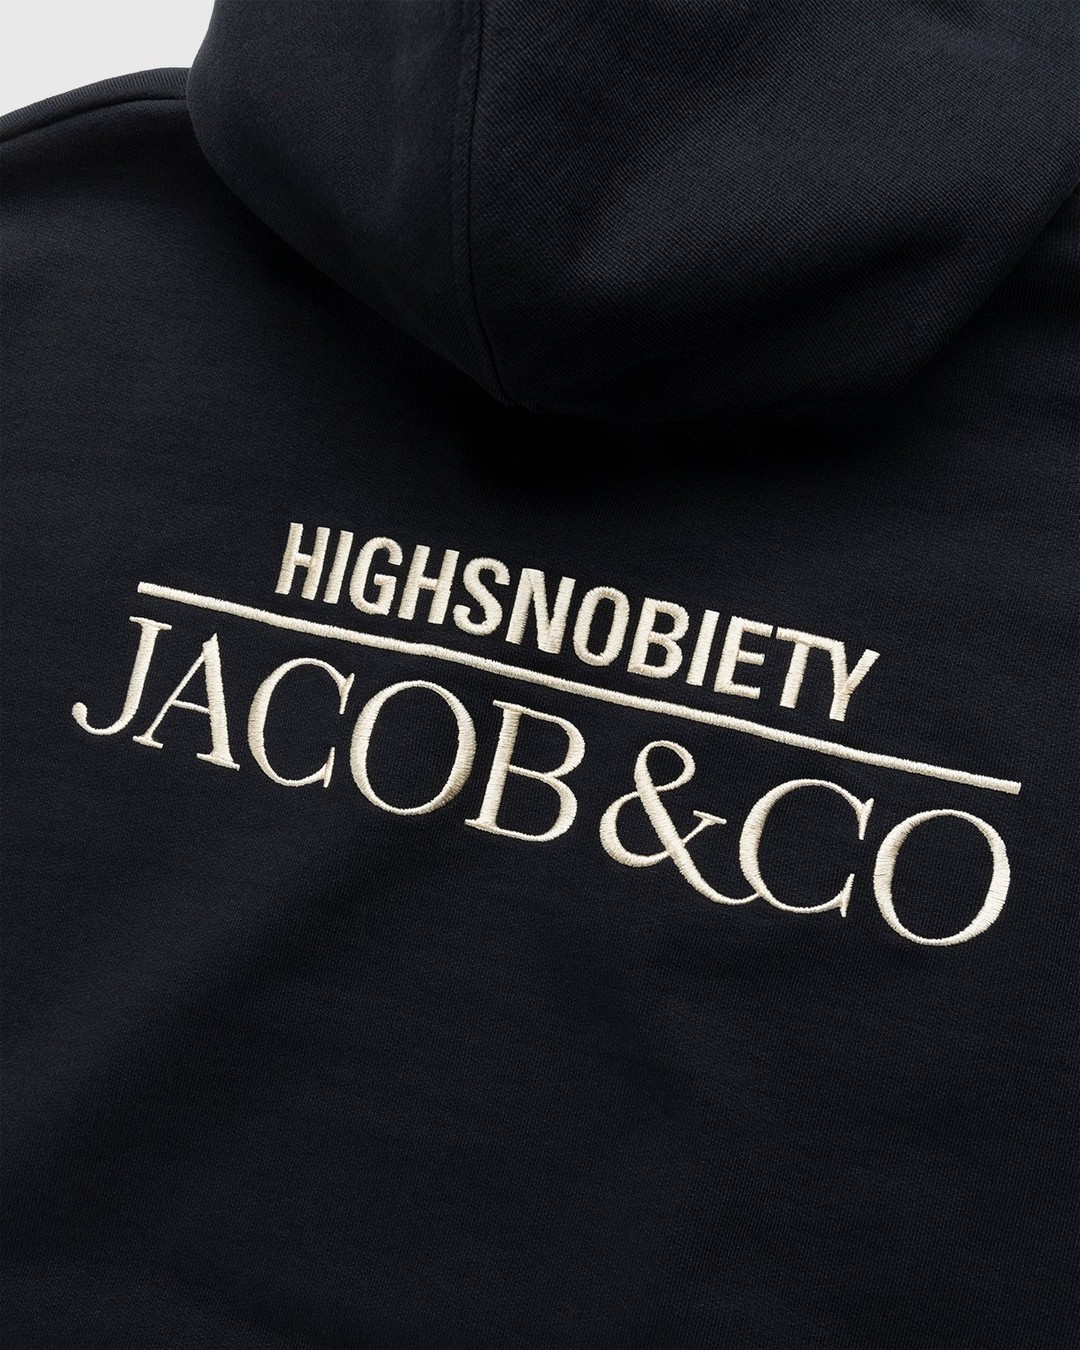 Jacob & Co. x Highsnobiety – City Fleece Hoodie Black - Sweats - Black - Image 3